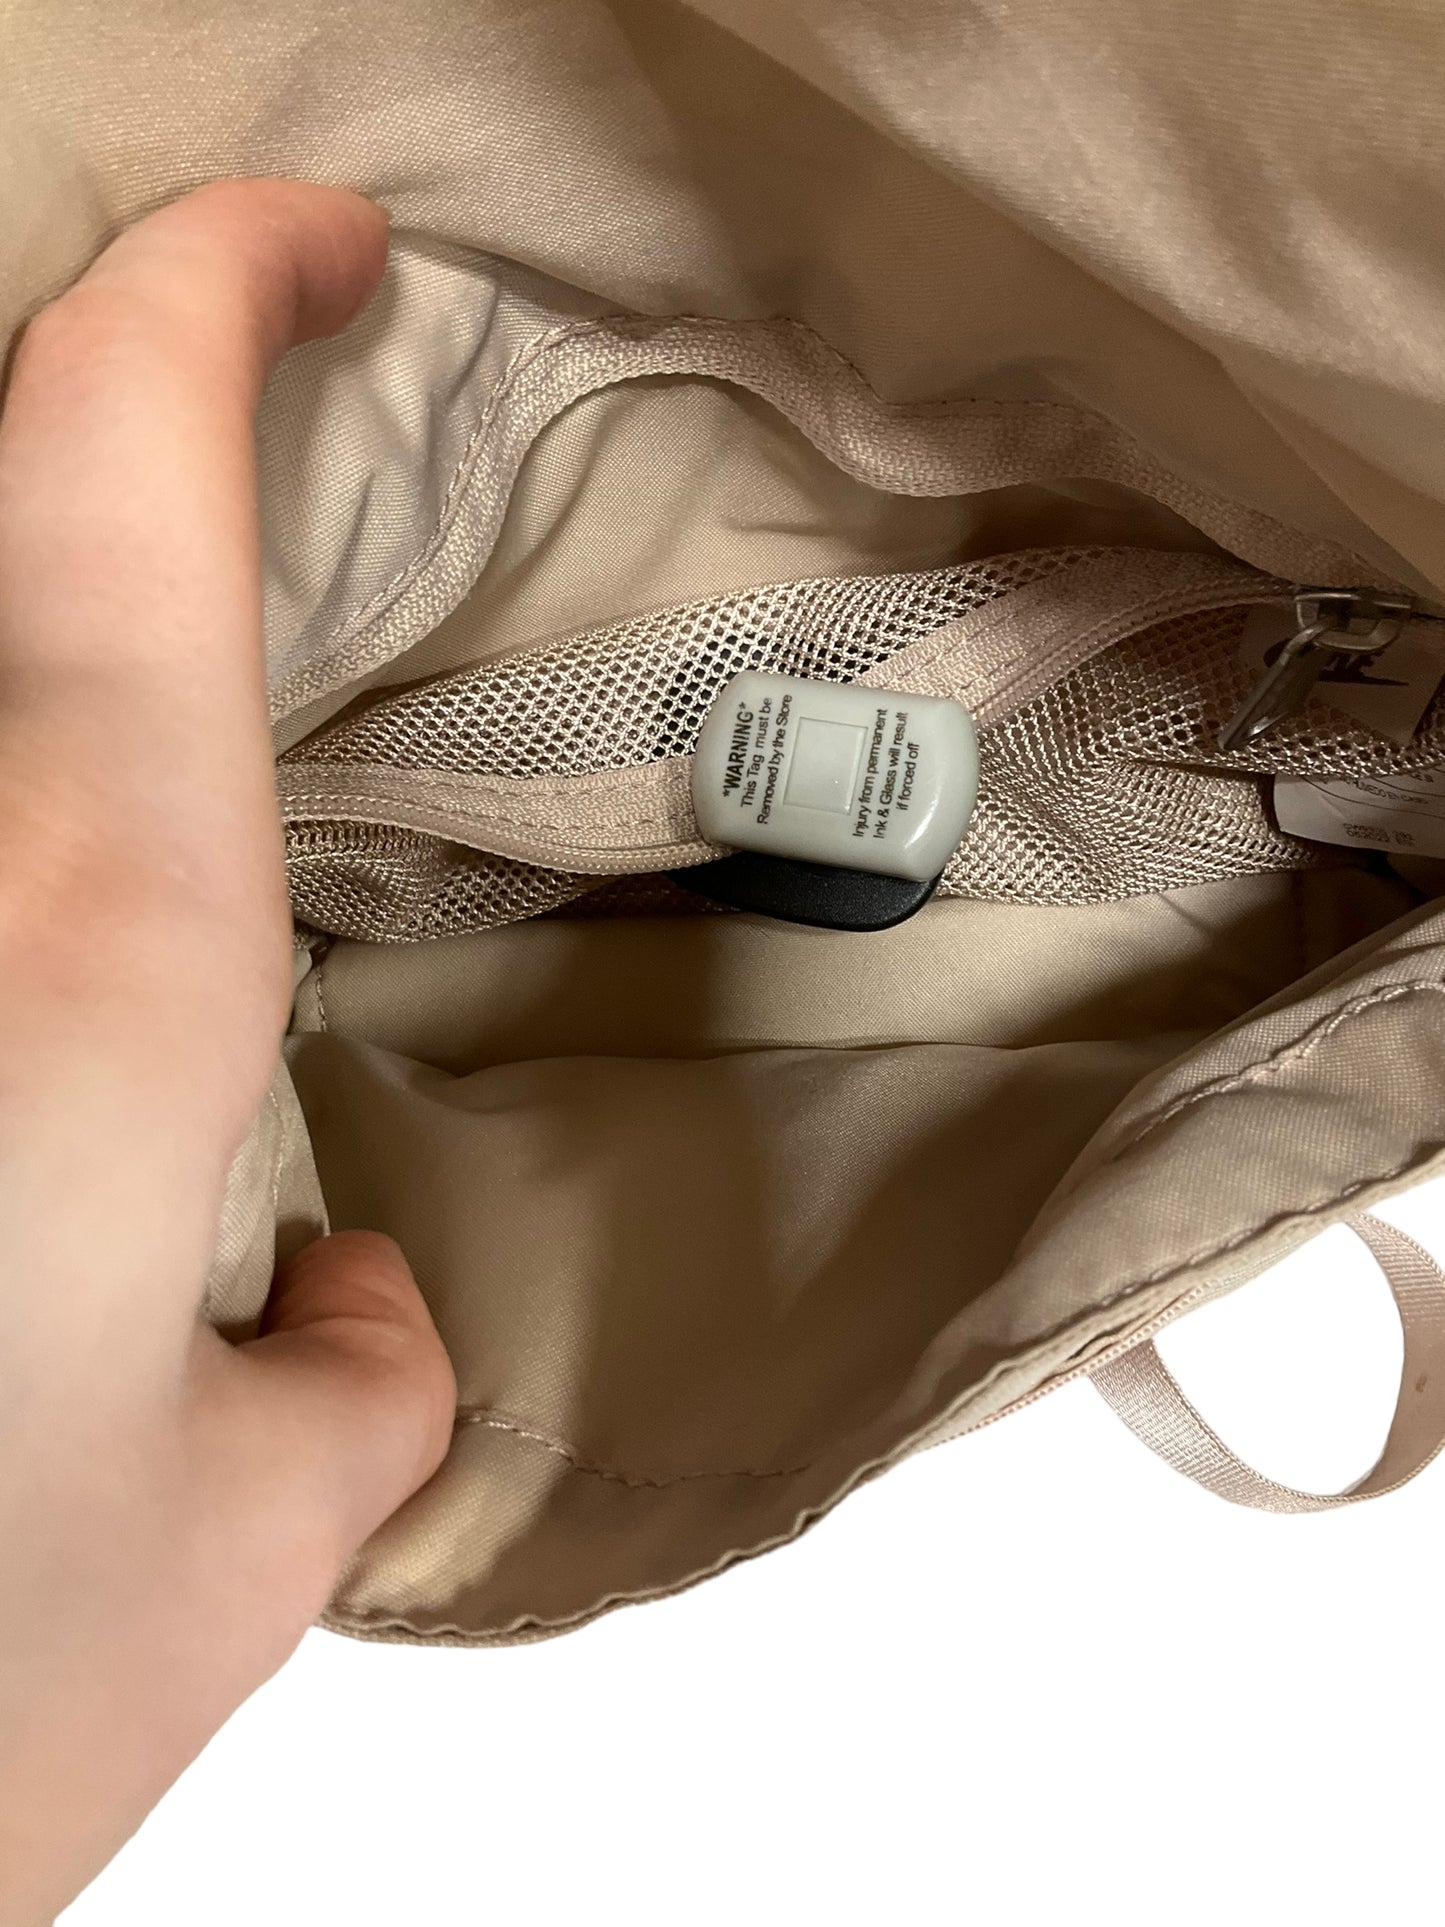 Handbag By Nike  Size: Medium